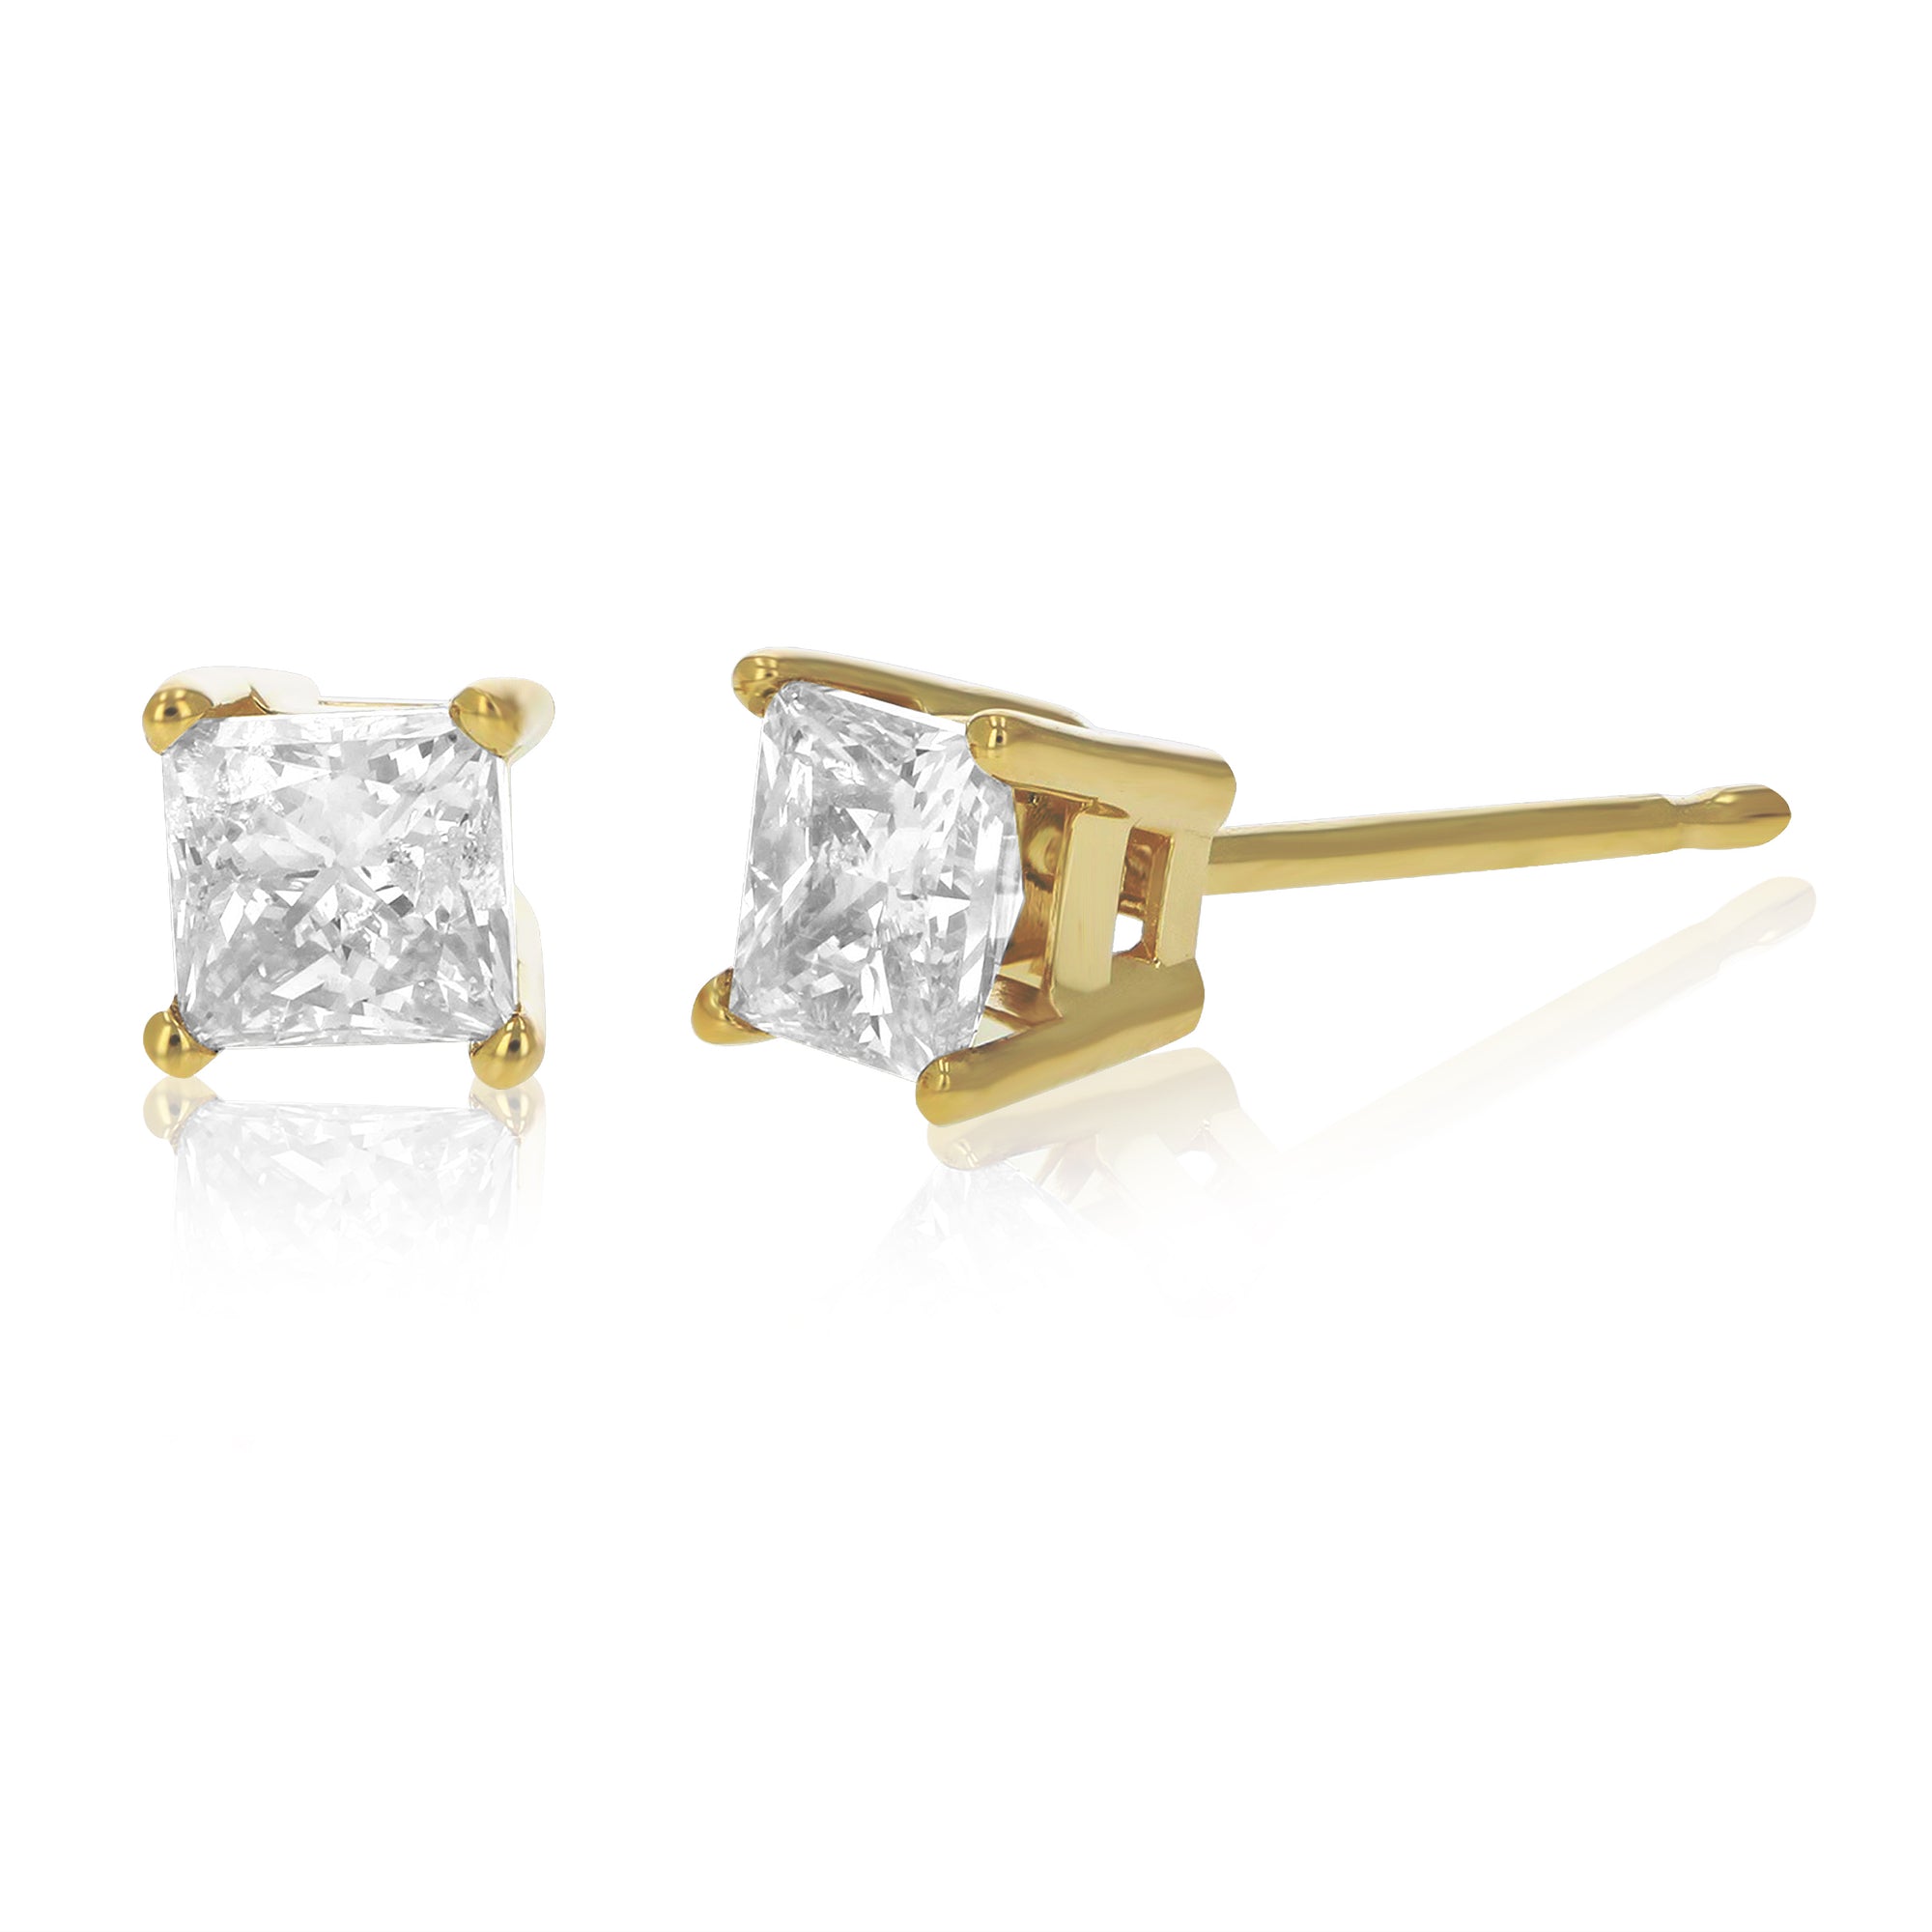 1.60 cttw Princess Cut Champagne Diamond Stud Earrings 14k Yellow Gold 4 Prong with Push Backs